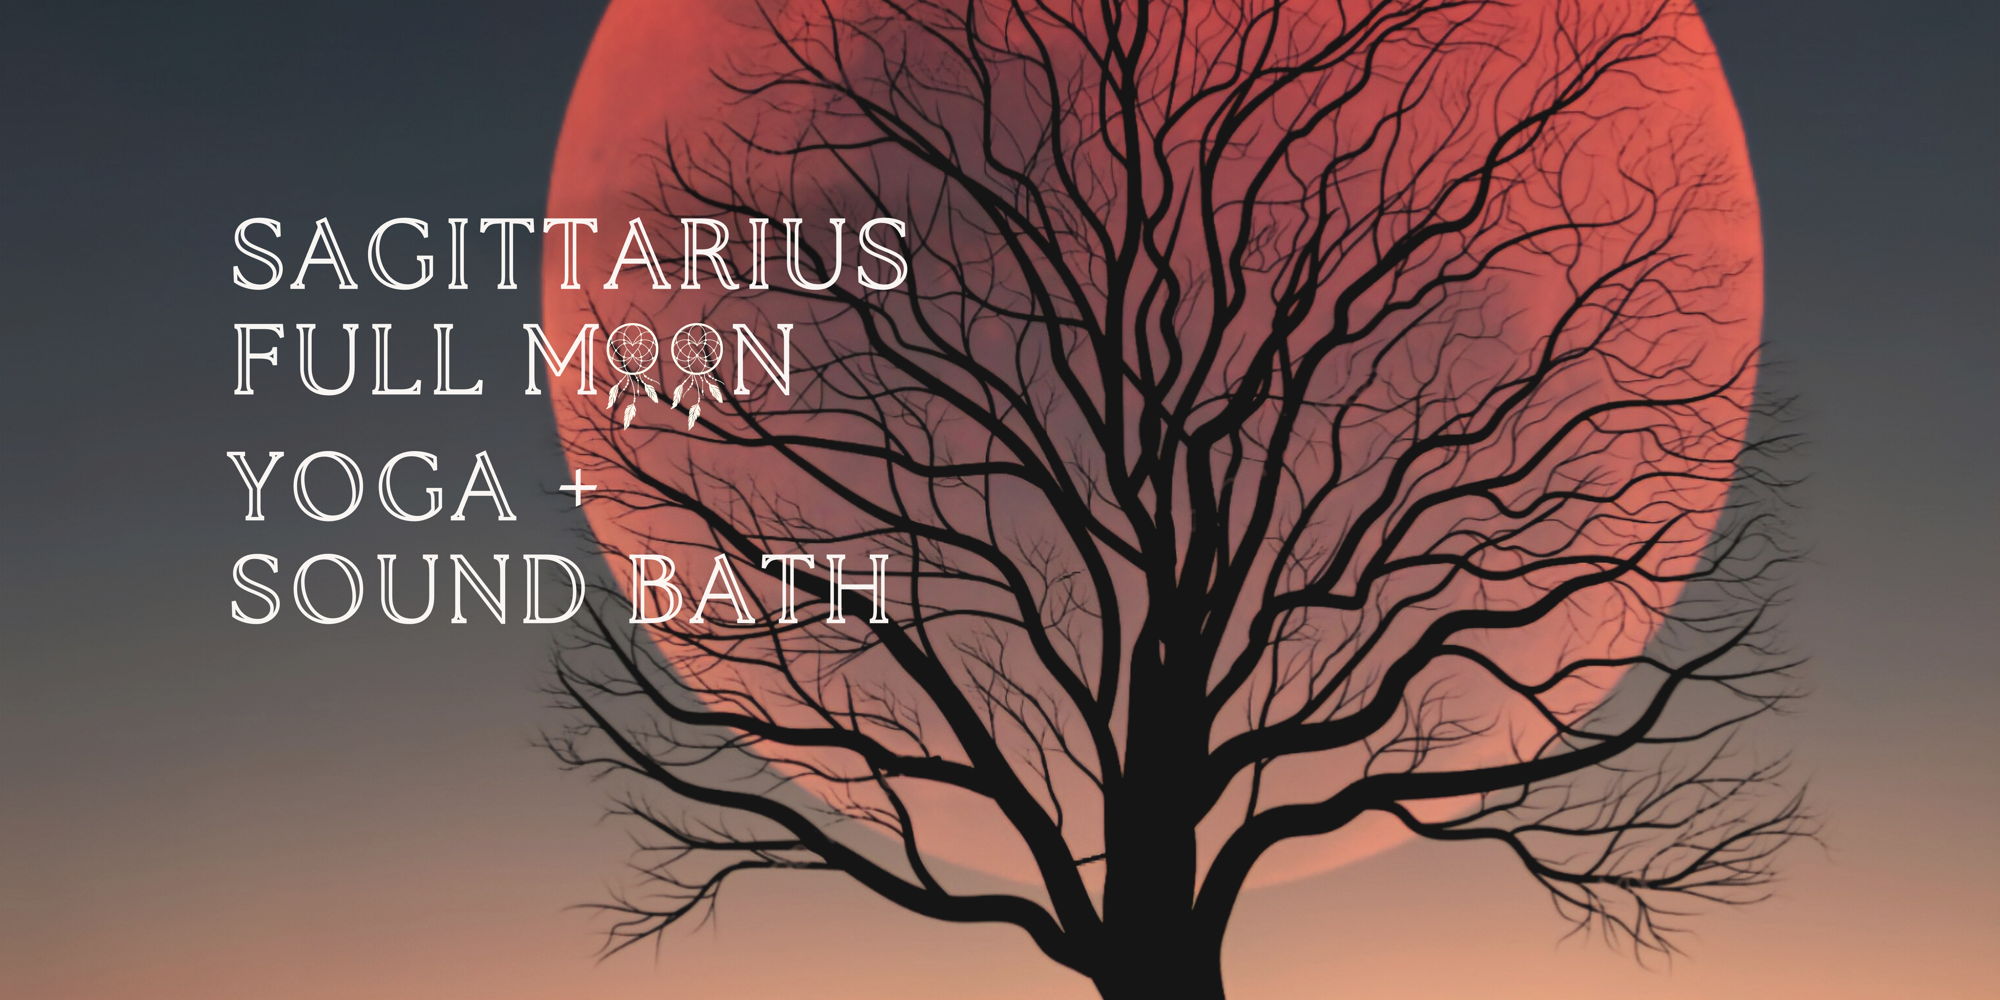 Sagittarius Full Moon Yoga & Sound Bath promotional image